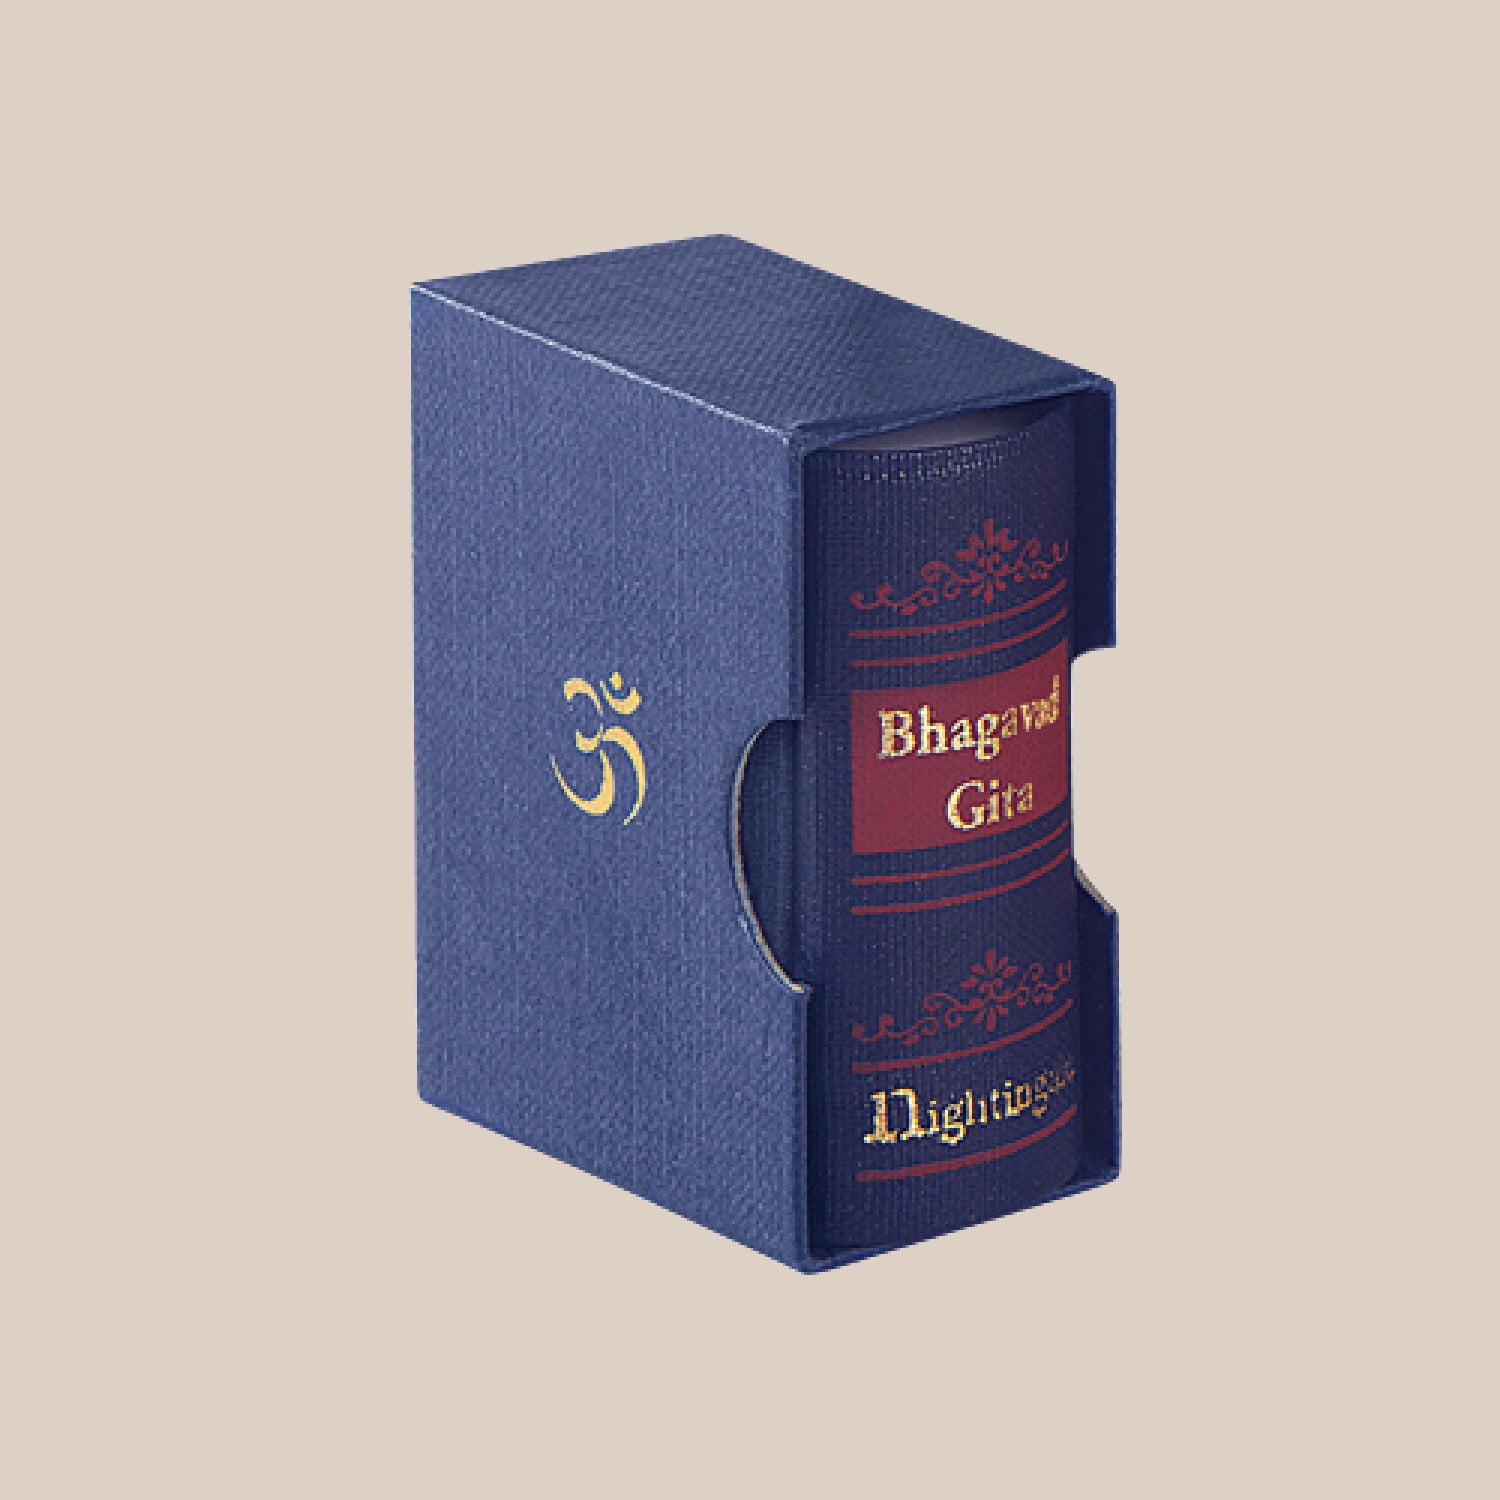 bhagavad-gita-a9-english-pocket-edition-books-books